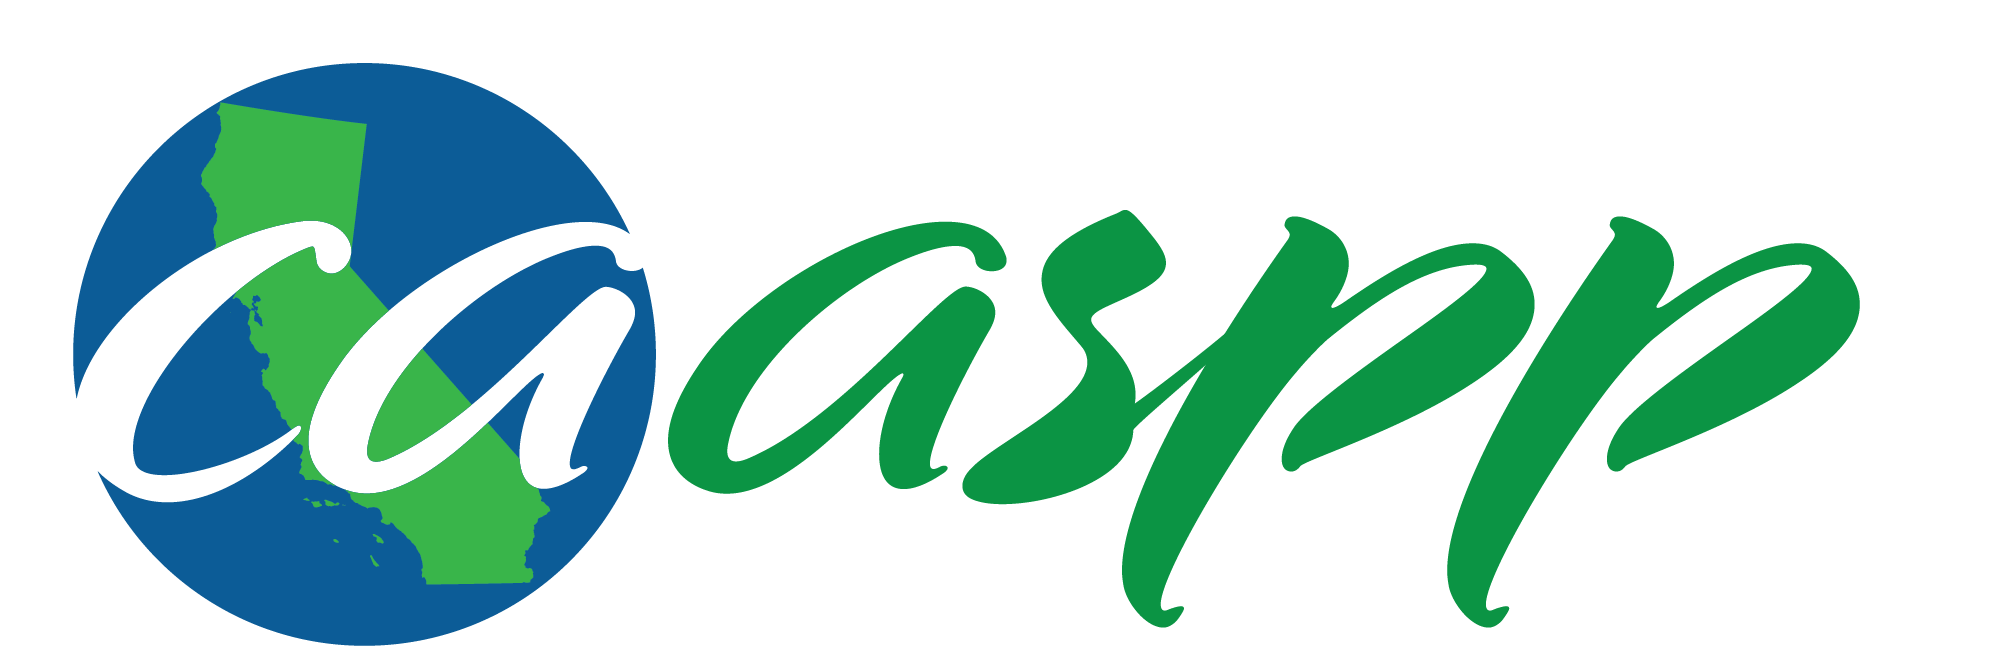 CAASPP state testing logo